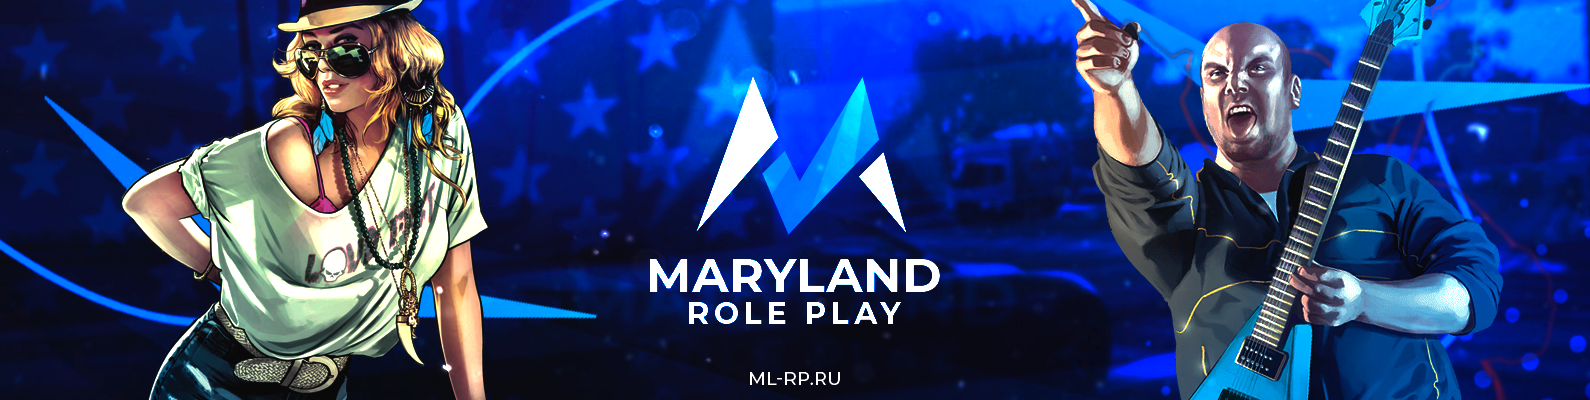 Maryland Mod